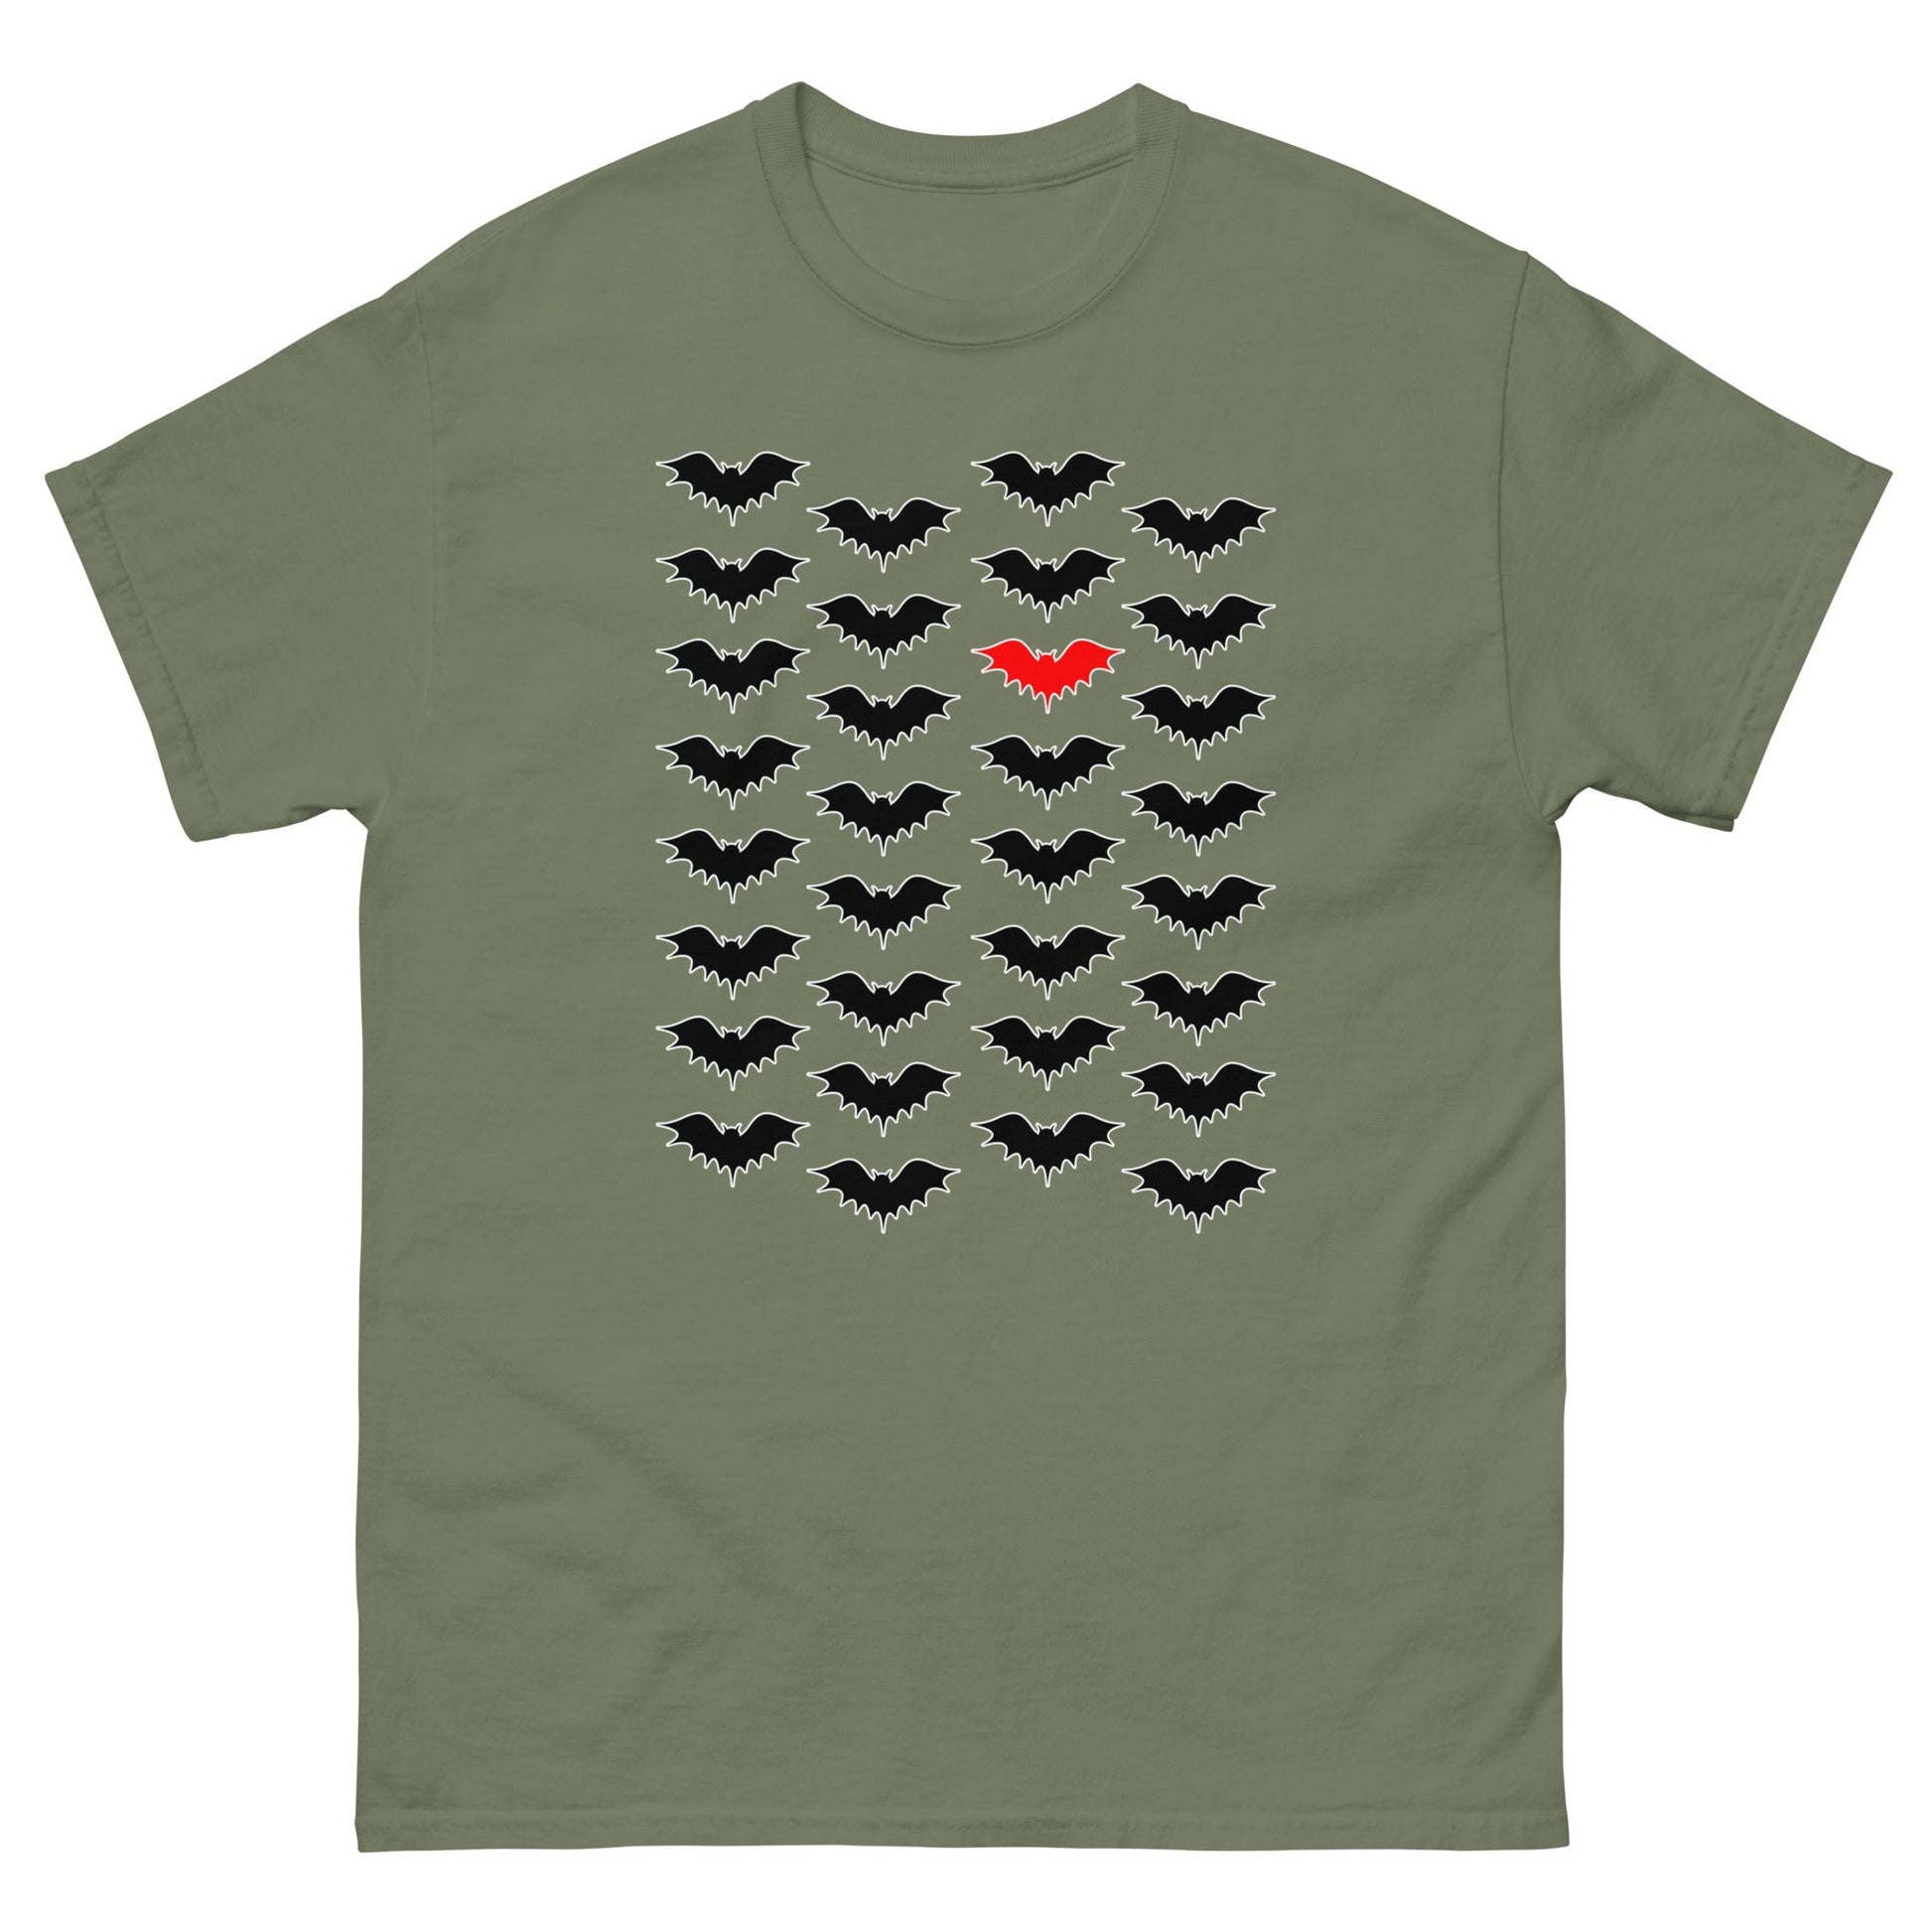 Scar Design T shirt Military Green / S Bat Diversity T-shirt